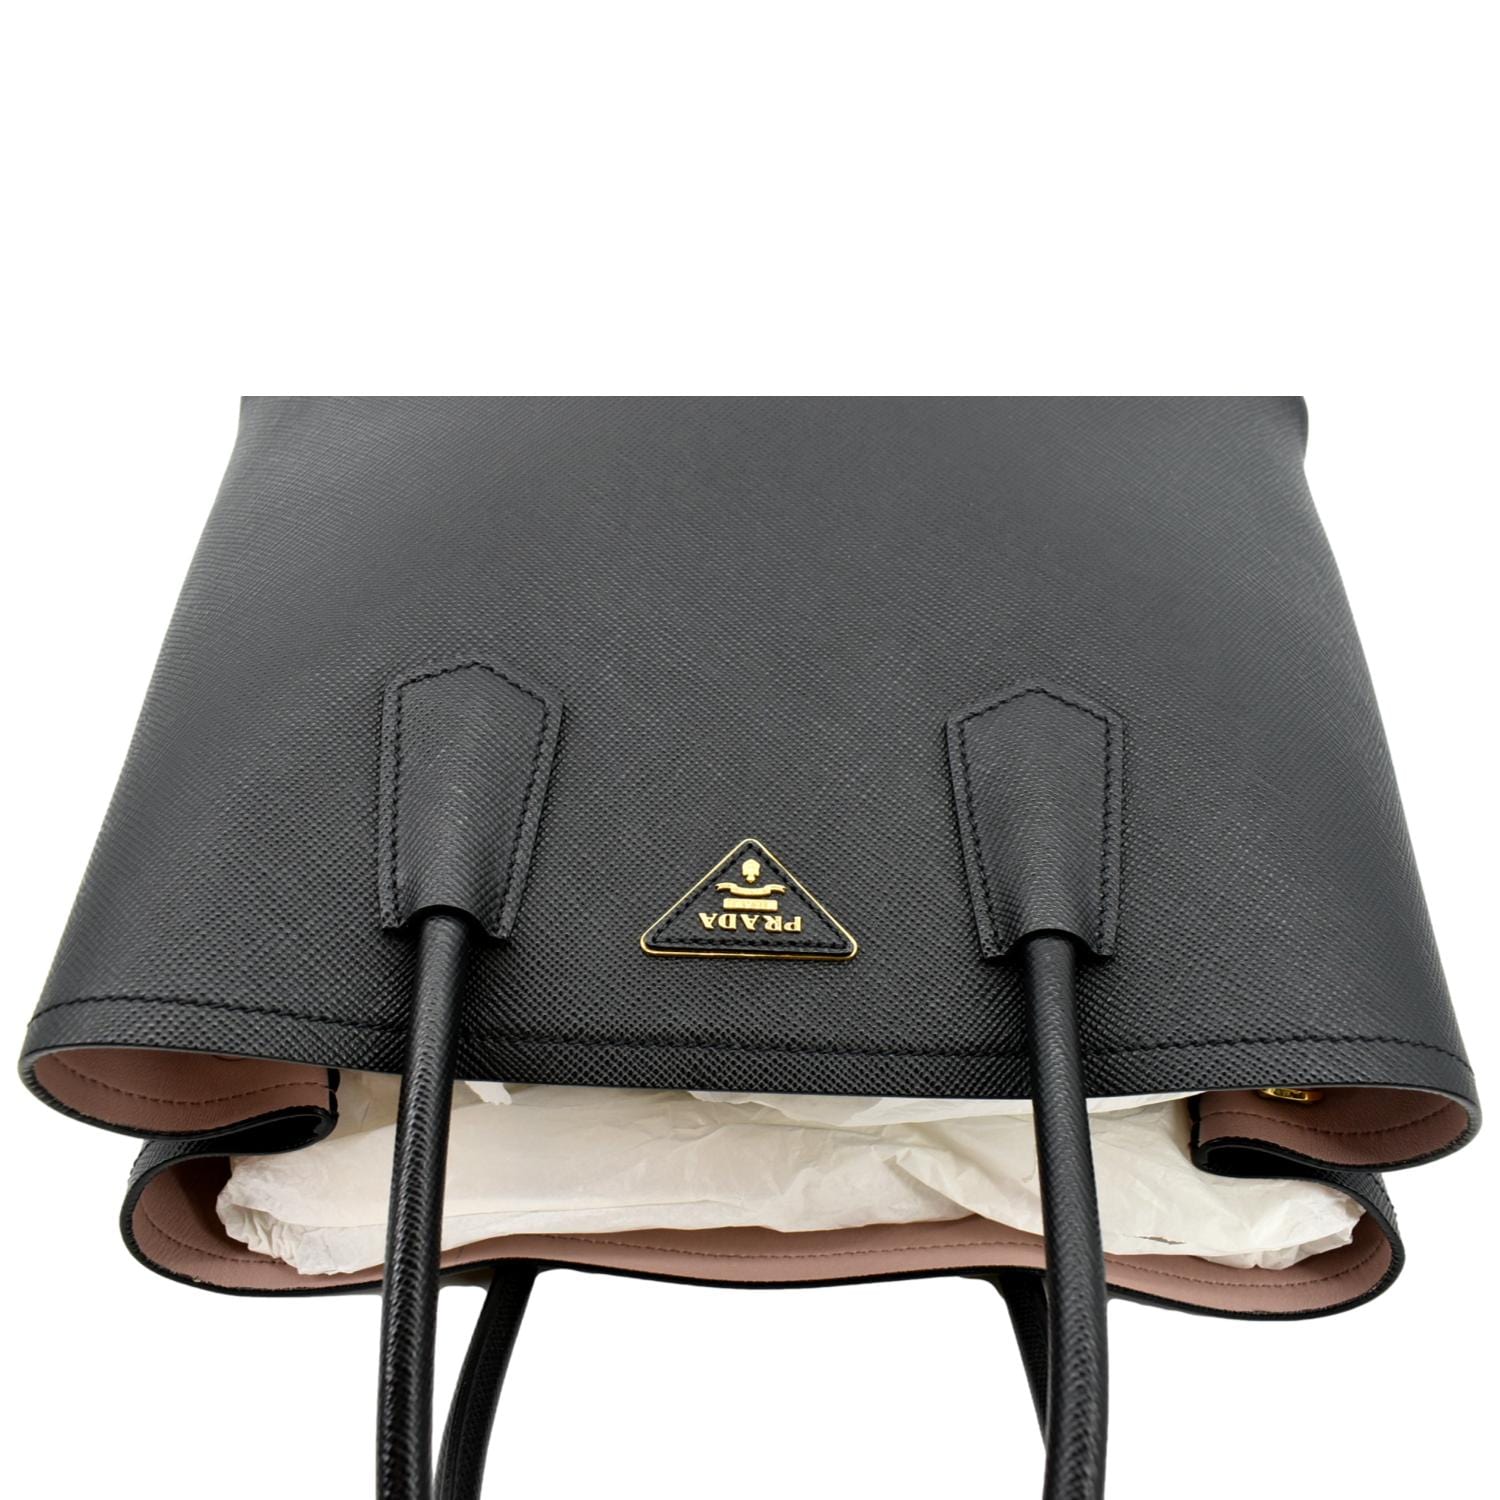 Prada Medium Saffiano Leather Tote Bag - Black